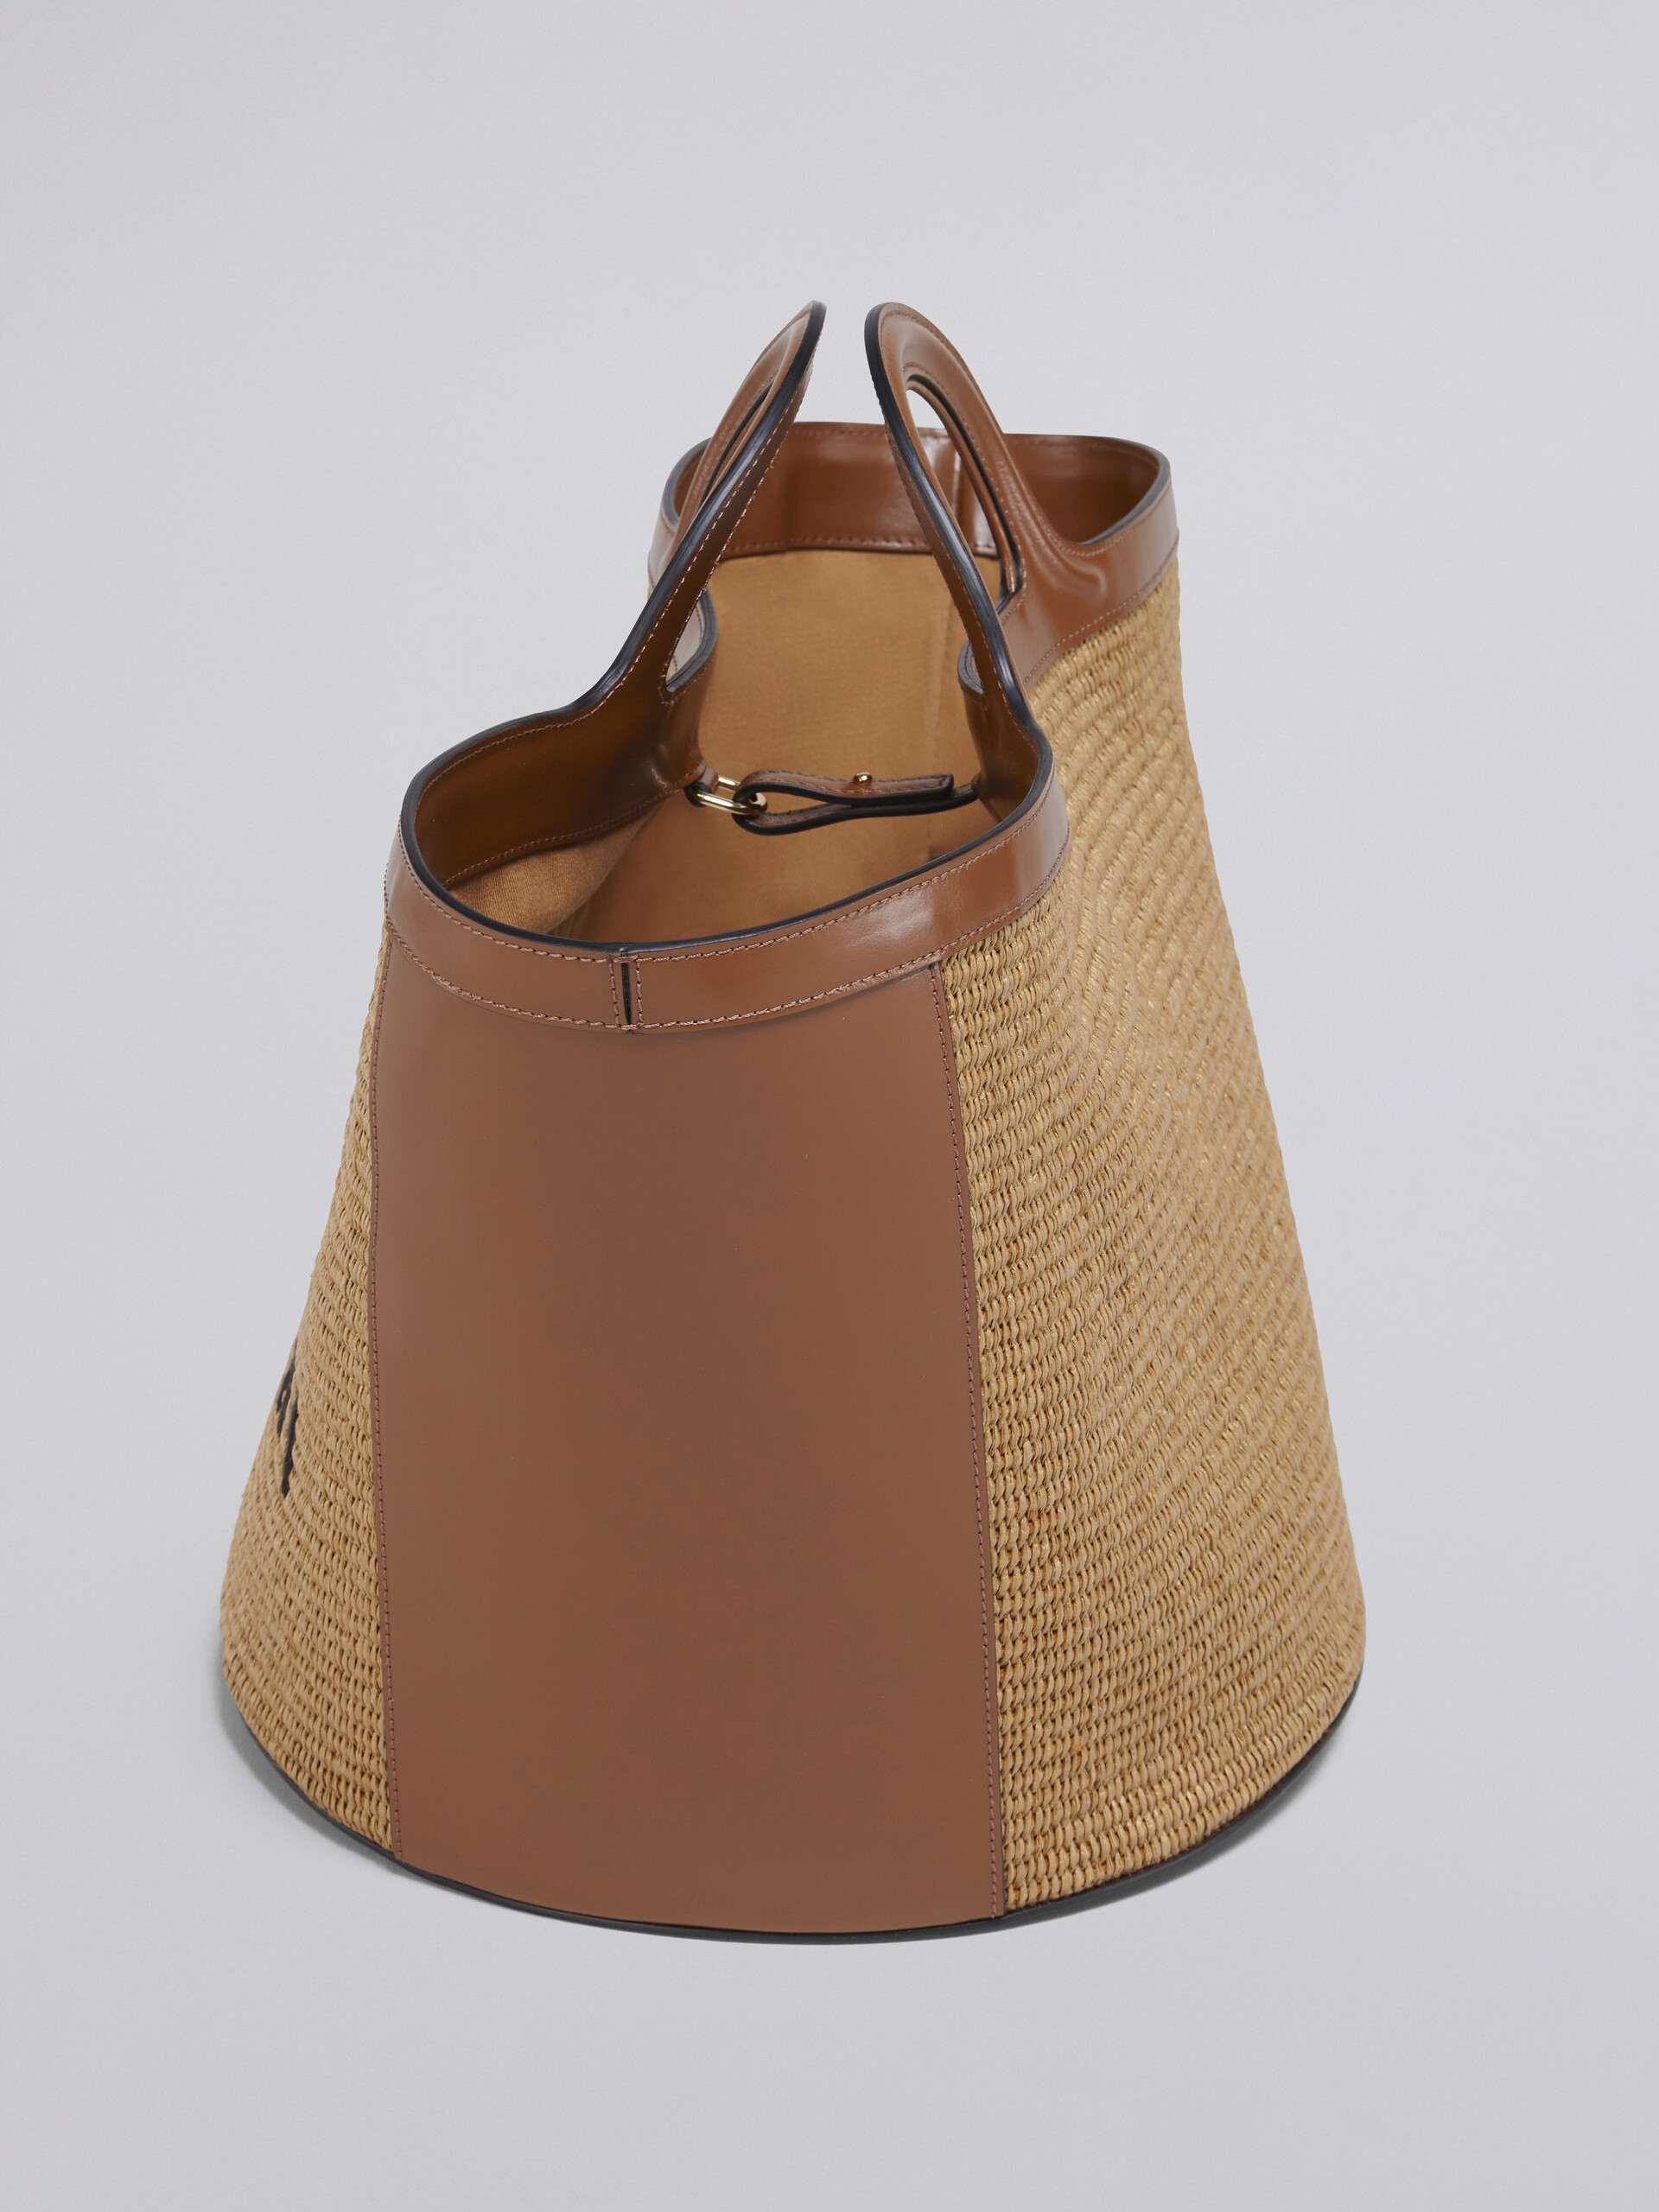 Marni Tropicalia Summer Bag Tropicalia Micro Bags Marni Beige And Black  Tropicalia Bag In Raffia With Handles, Shoulder Strap And Fabric Lining